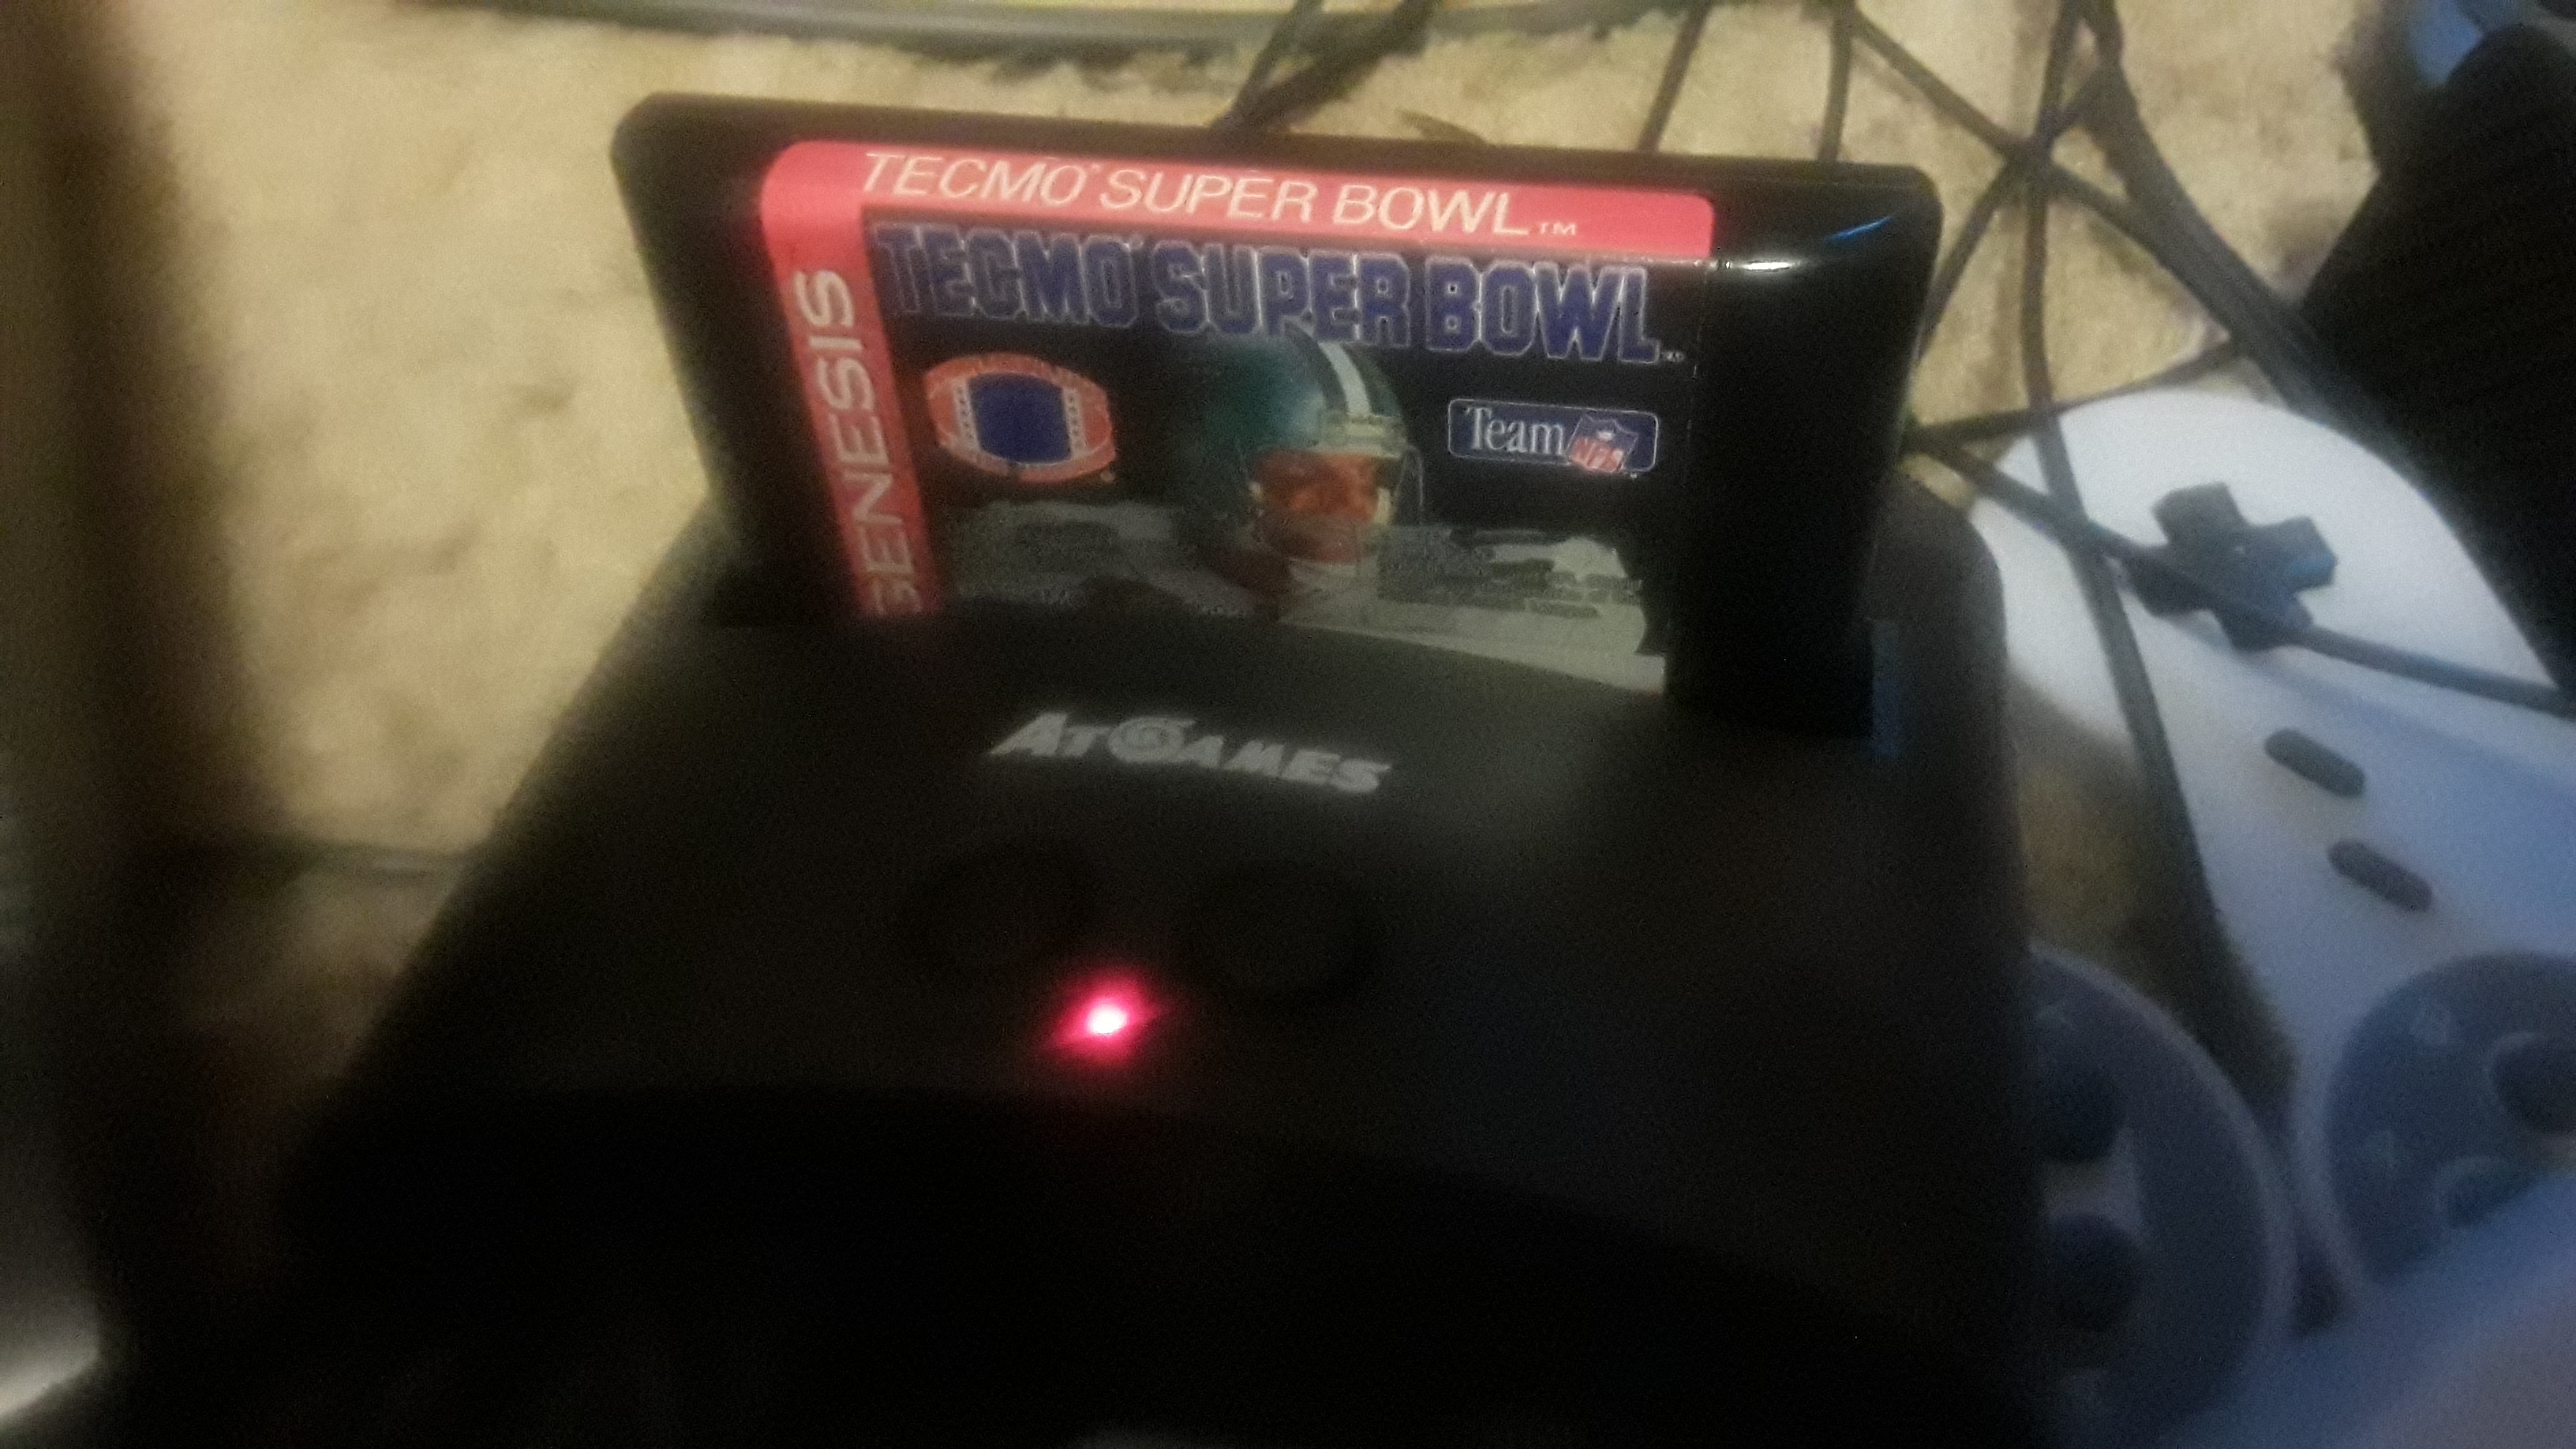 JML101582: Tecmo Super Bowl [Most Passing Yards] [Preseason] (Sega Genesis / MegaDrive Emulated) 731 points on 2019-08-30 21:36:50